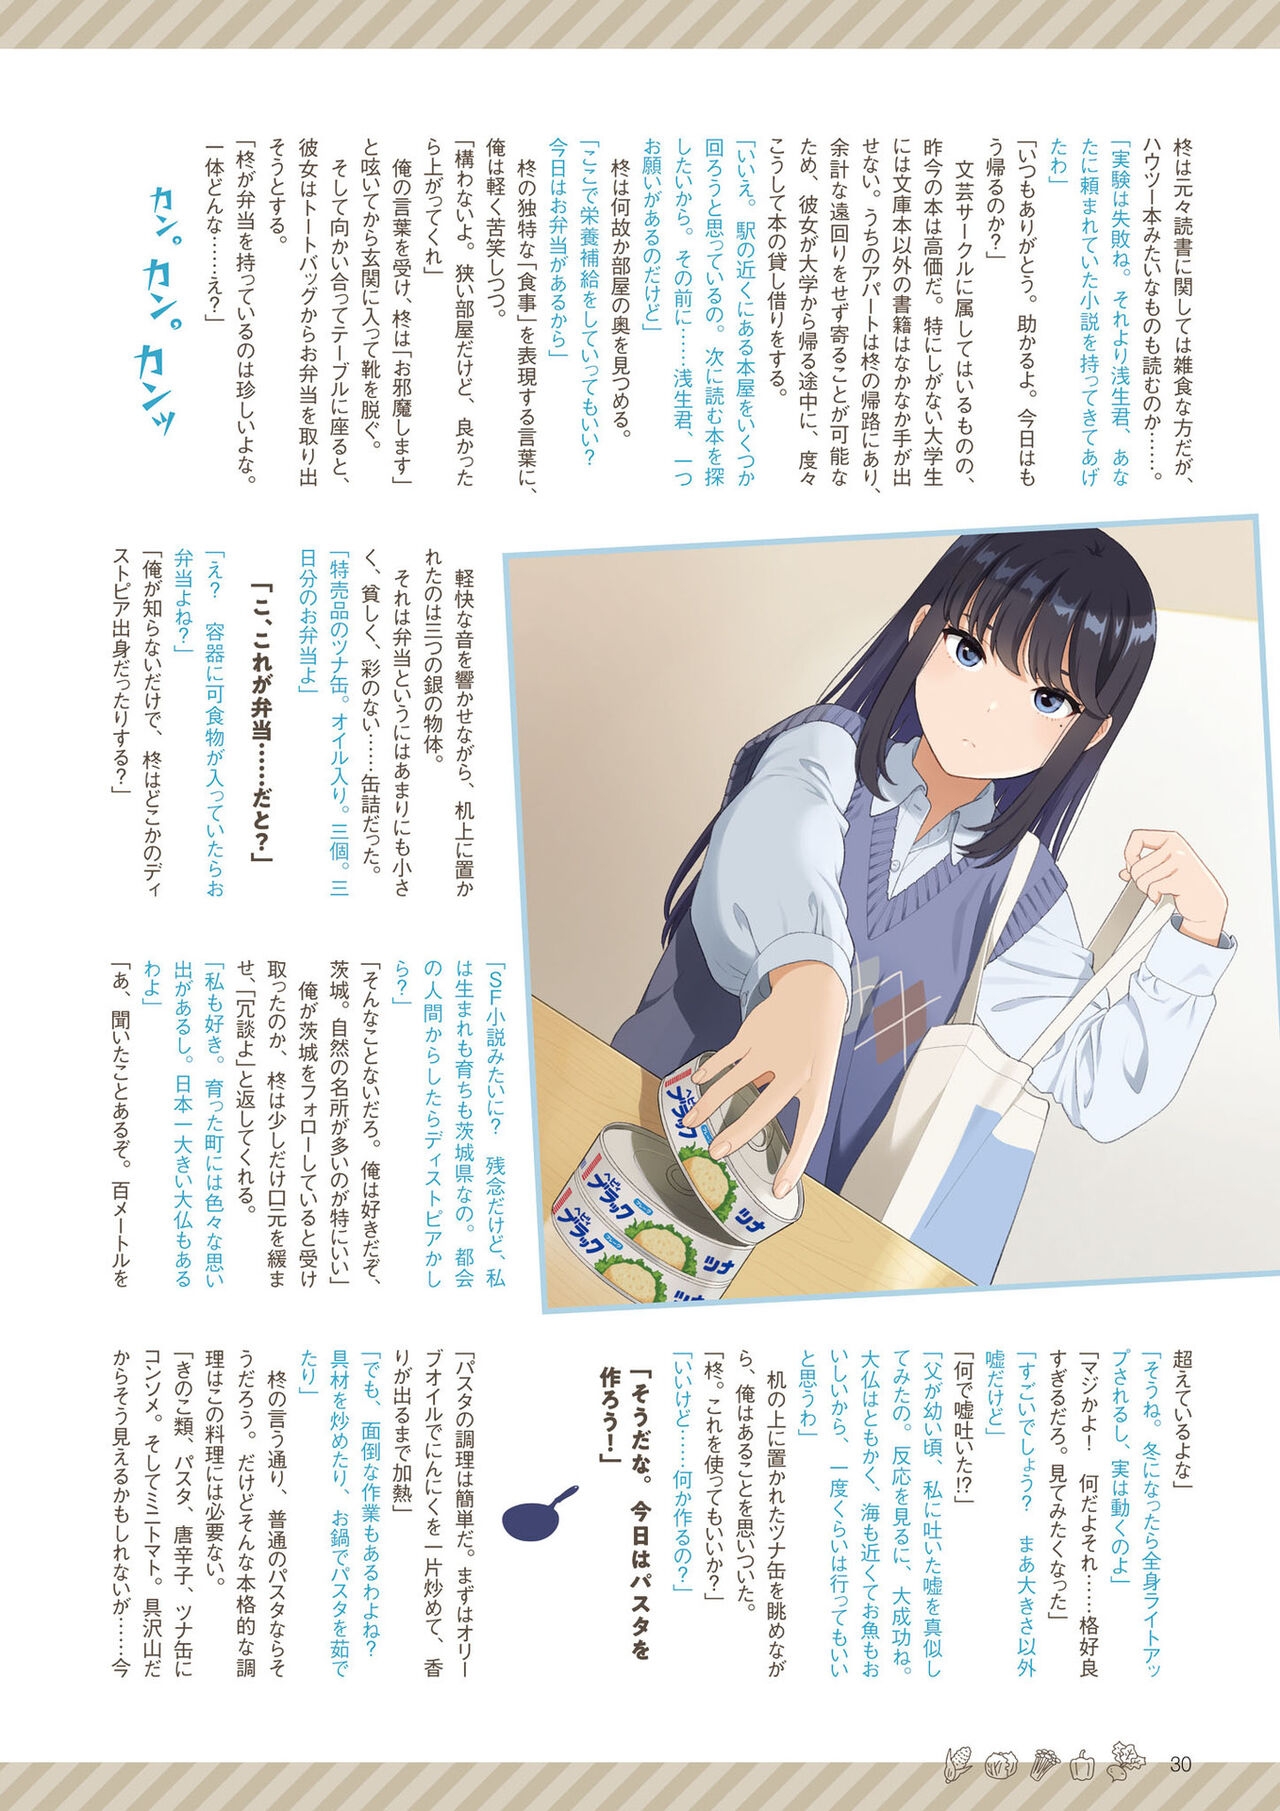 Dengeki G's Magazine #297 - April 2022 27